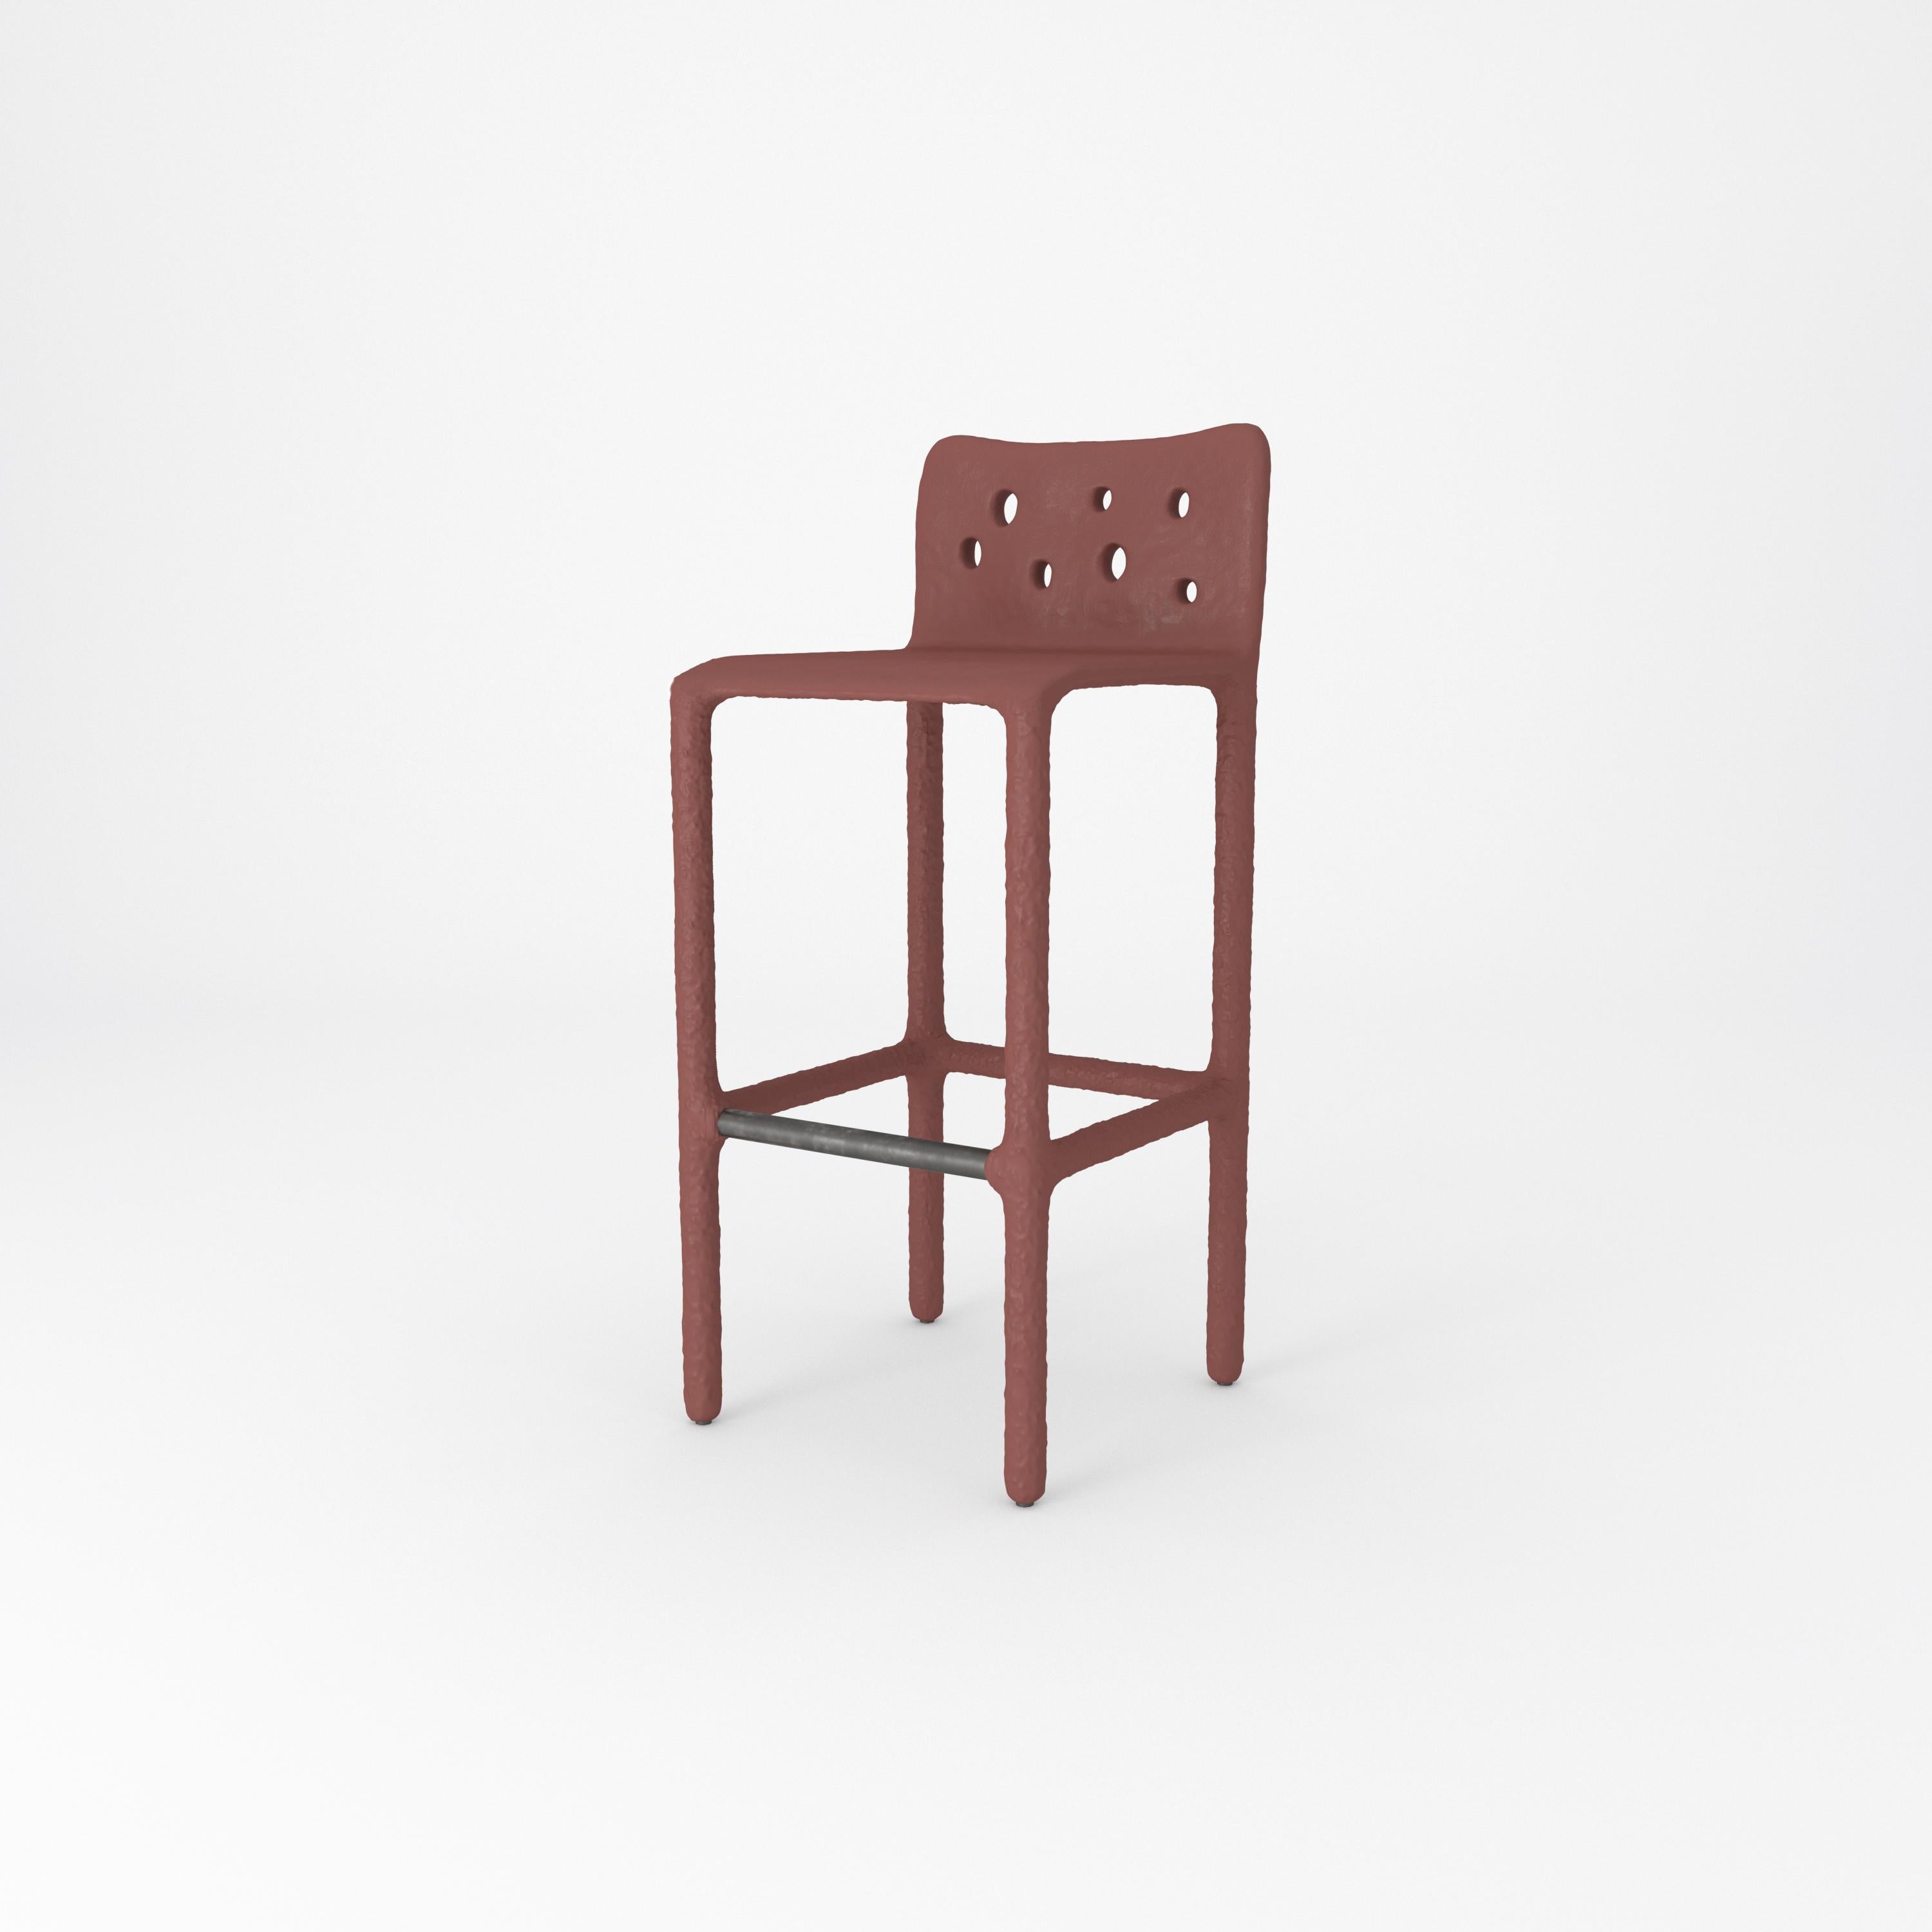 White Sculpted Contemporary Chair by FAINA 4